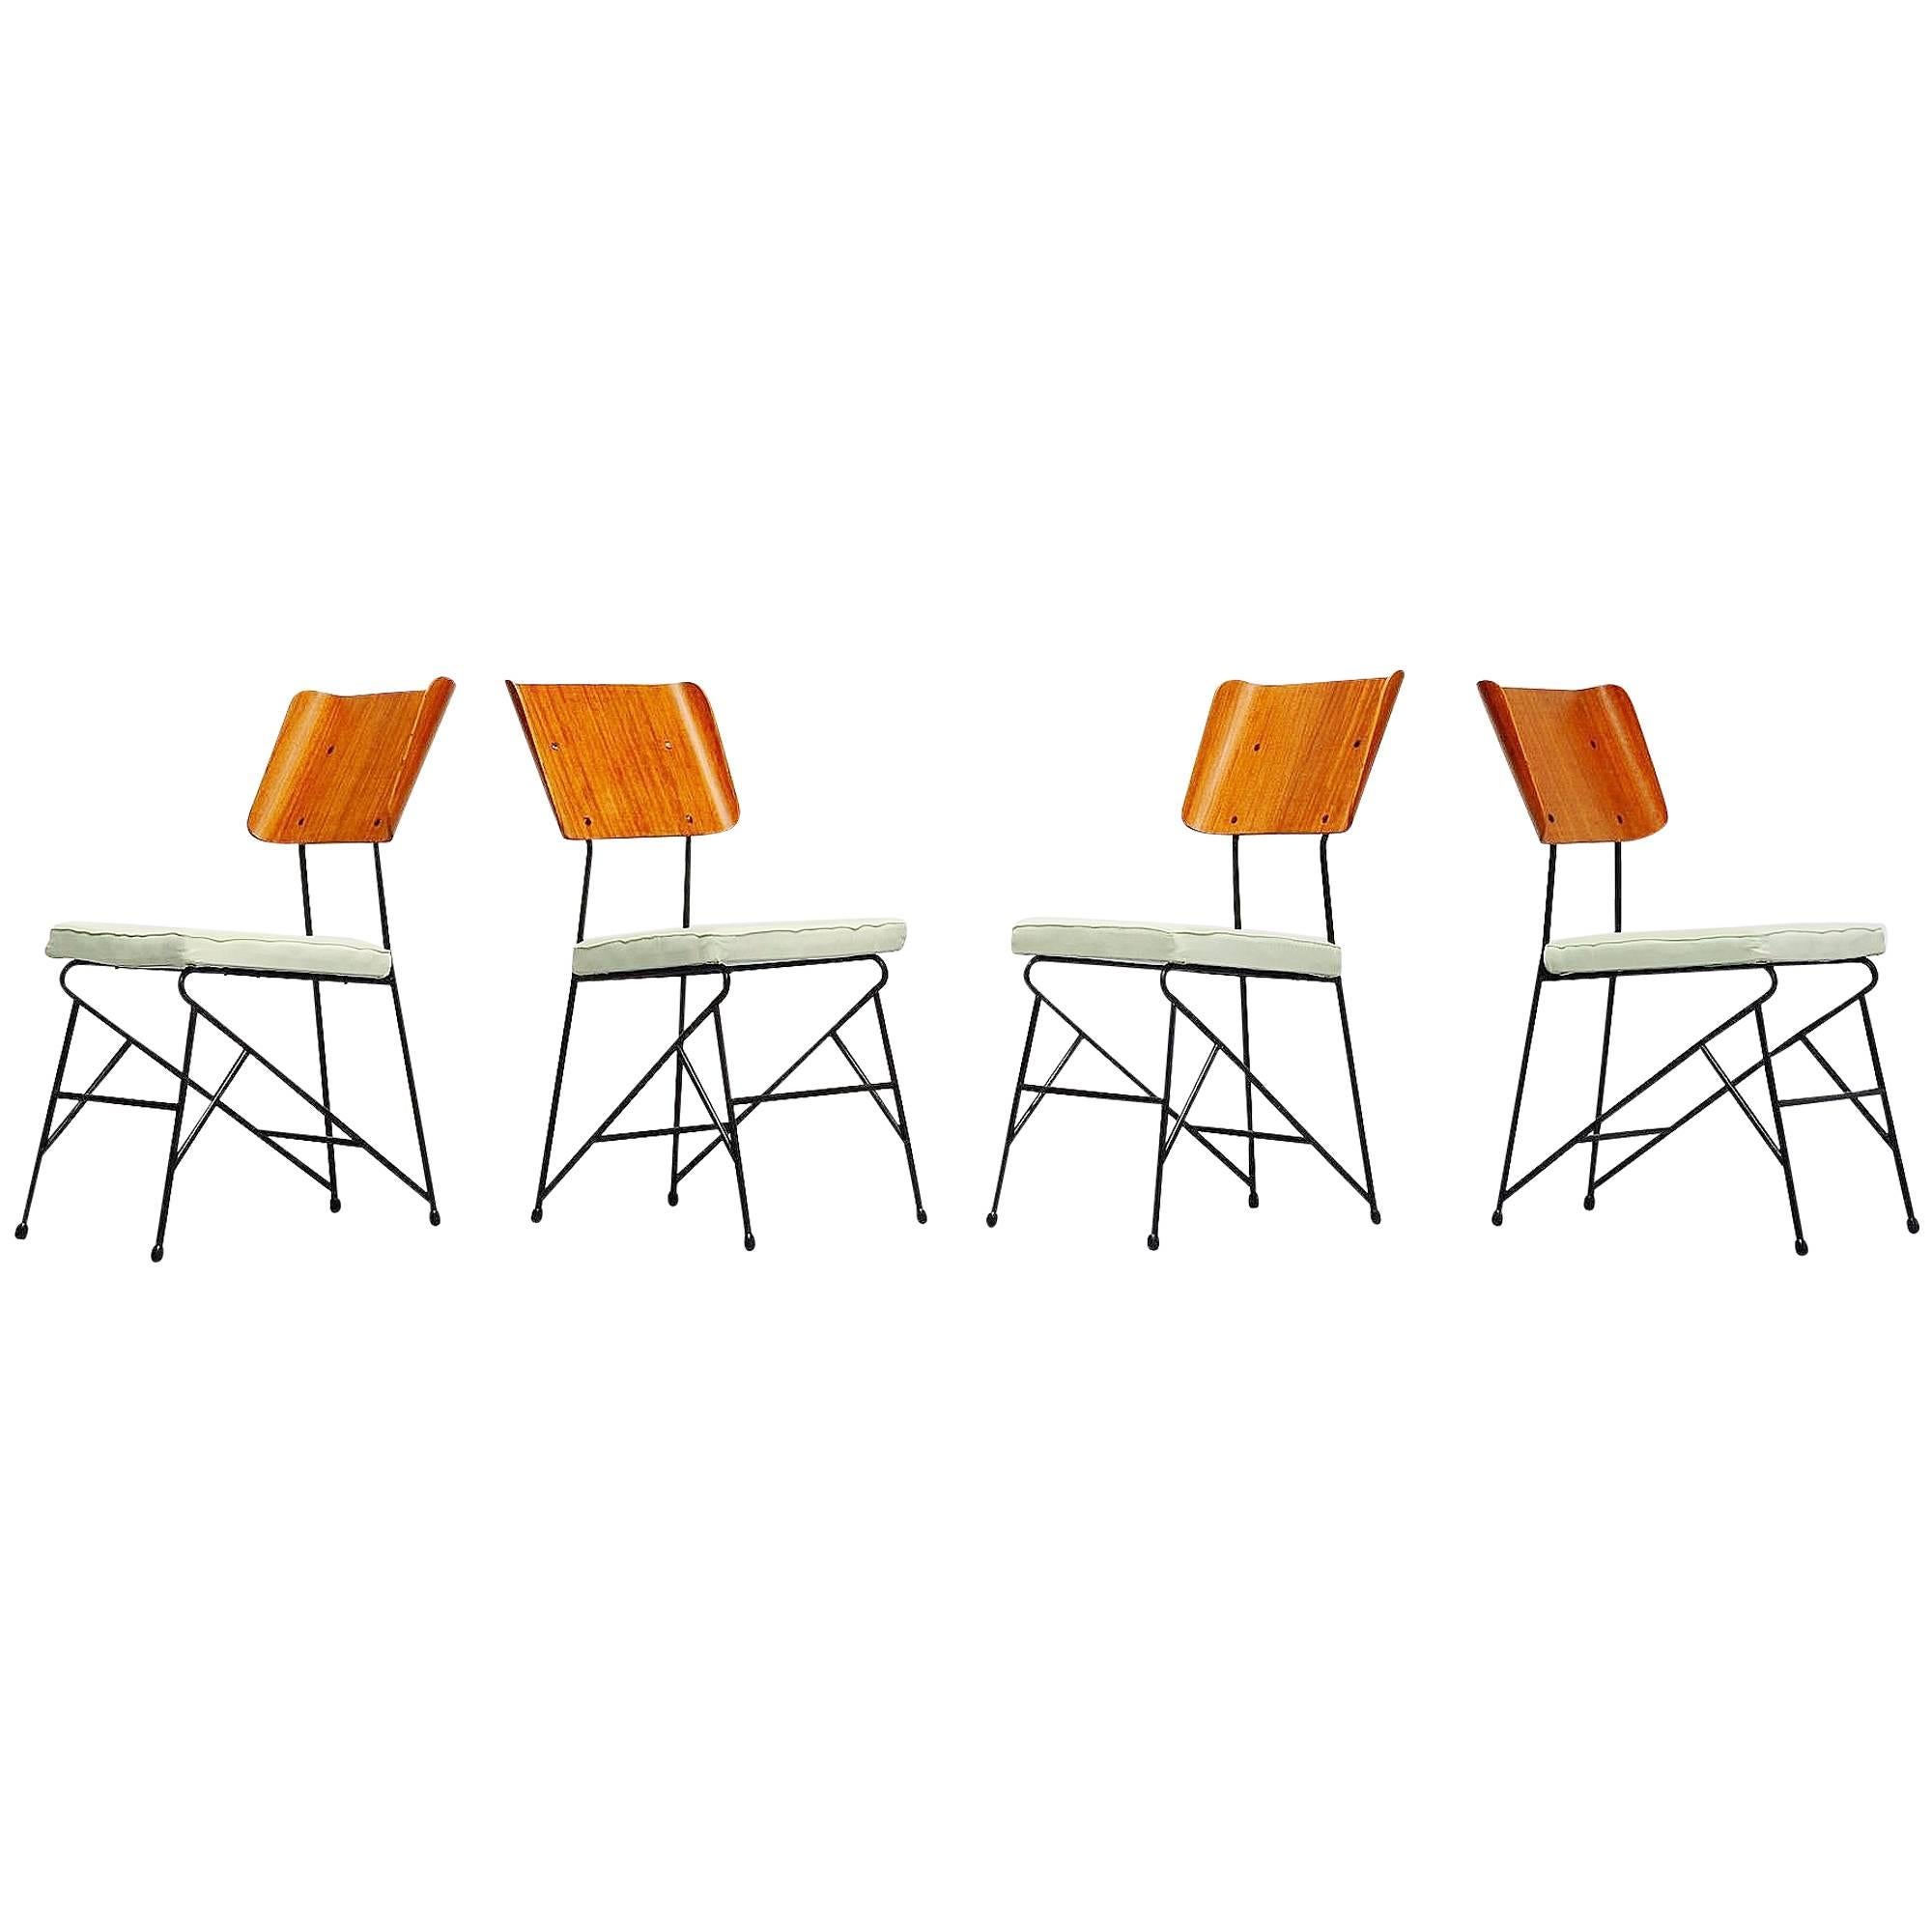 Carlo Ratti Dining Chairs for Legni Curva, Italy, 1950